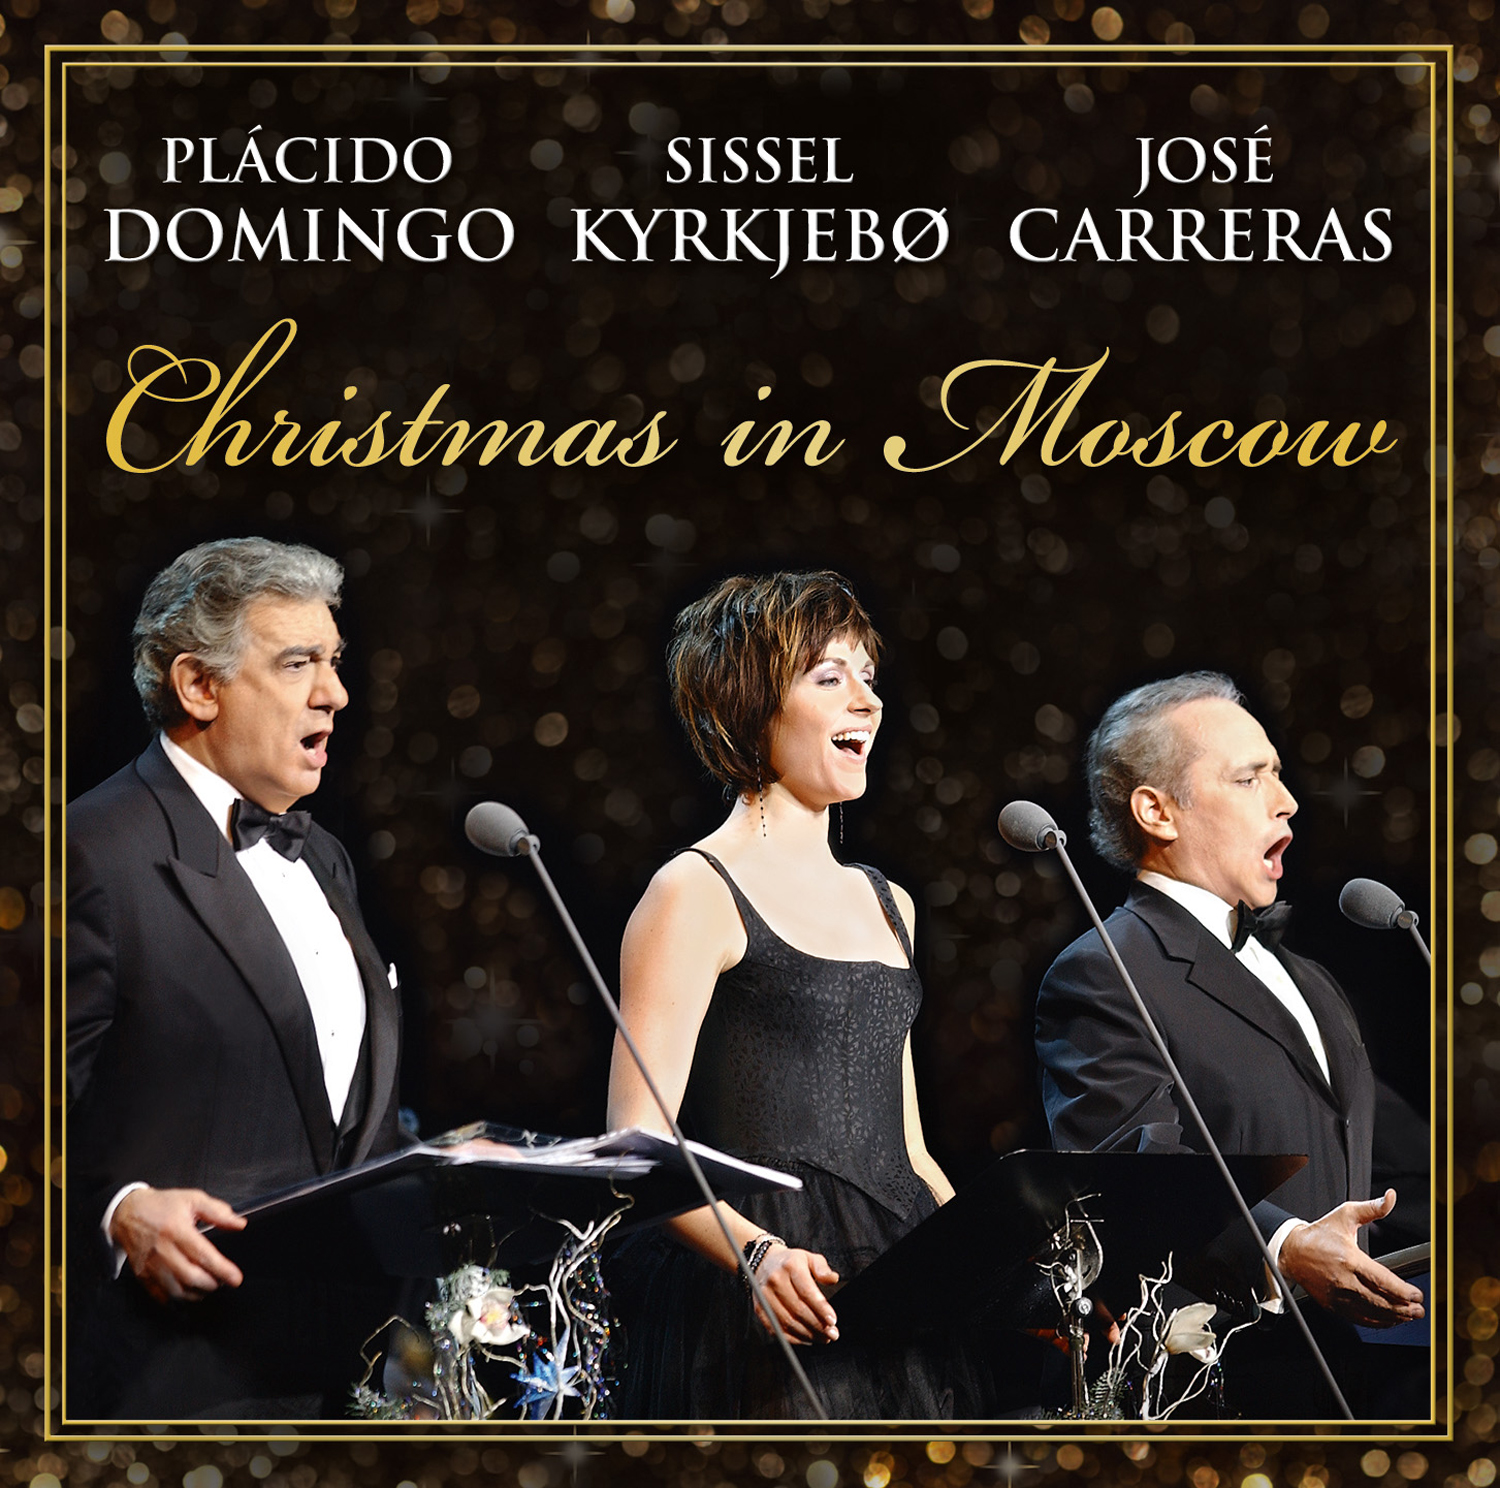 José Carreras, Plácido Domingo, - In (CD) Sissel Christmas - Moscow Kyrkjebo